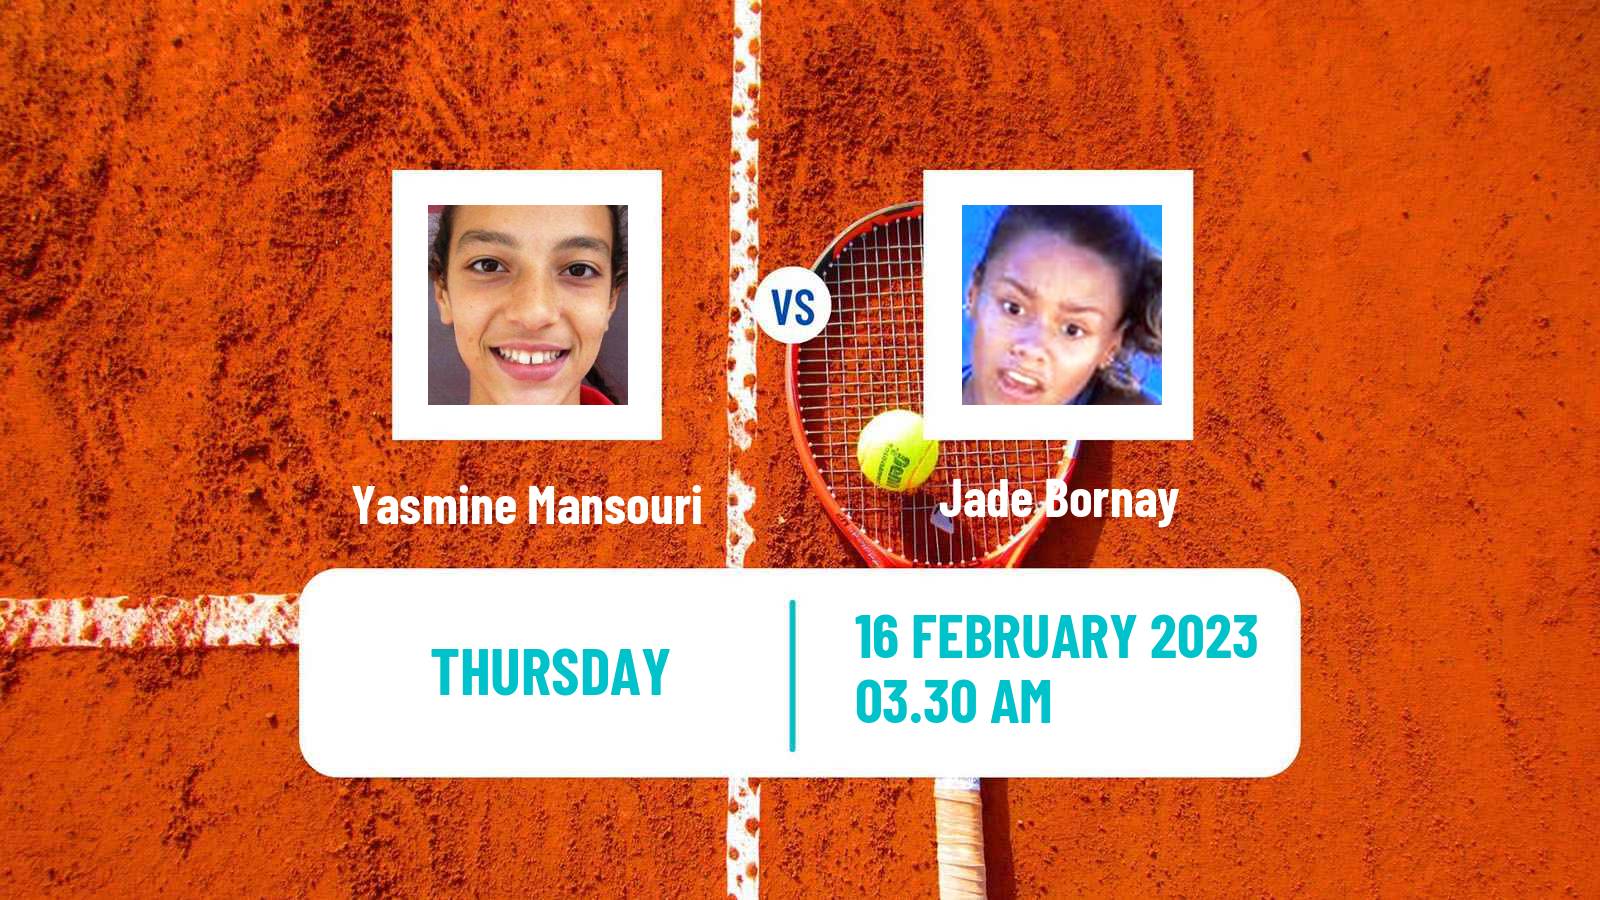 Tennis ITF Tournaments Yasmine Mansouri - Jade Bornay